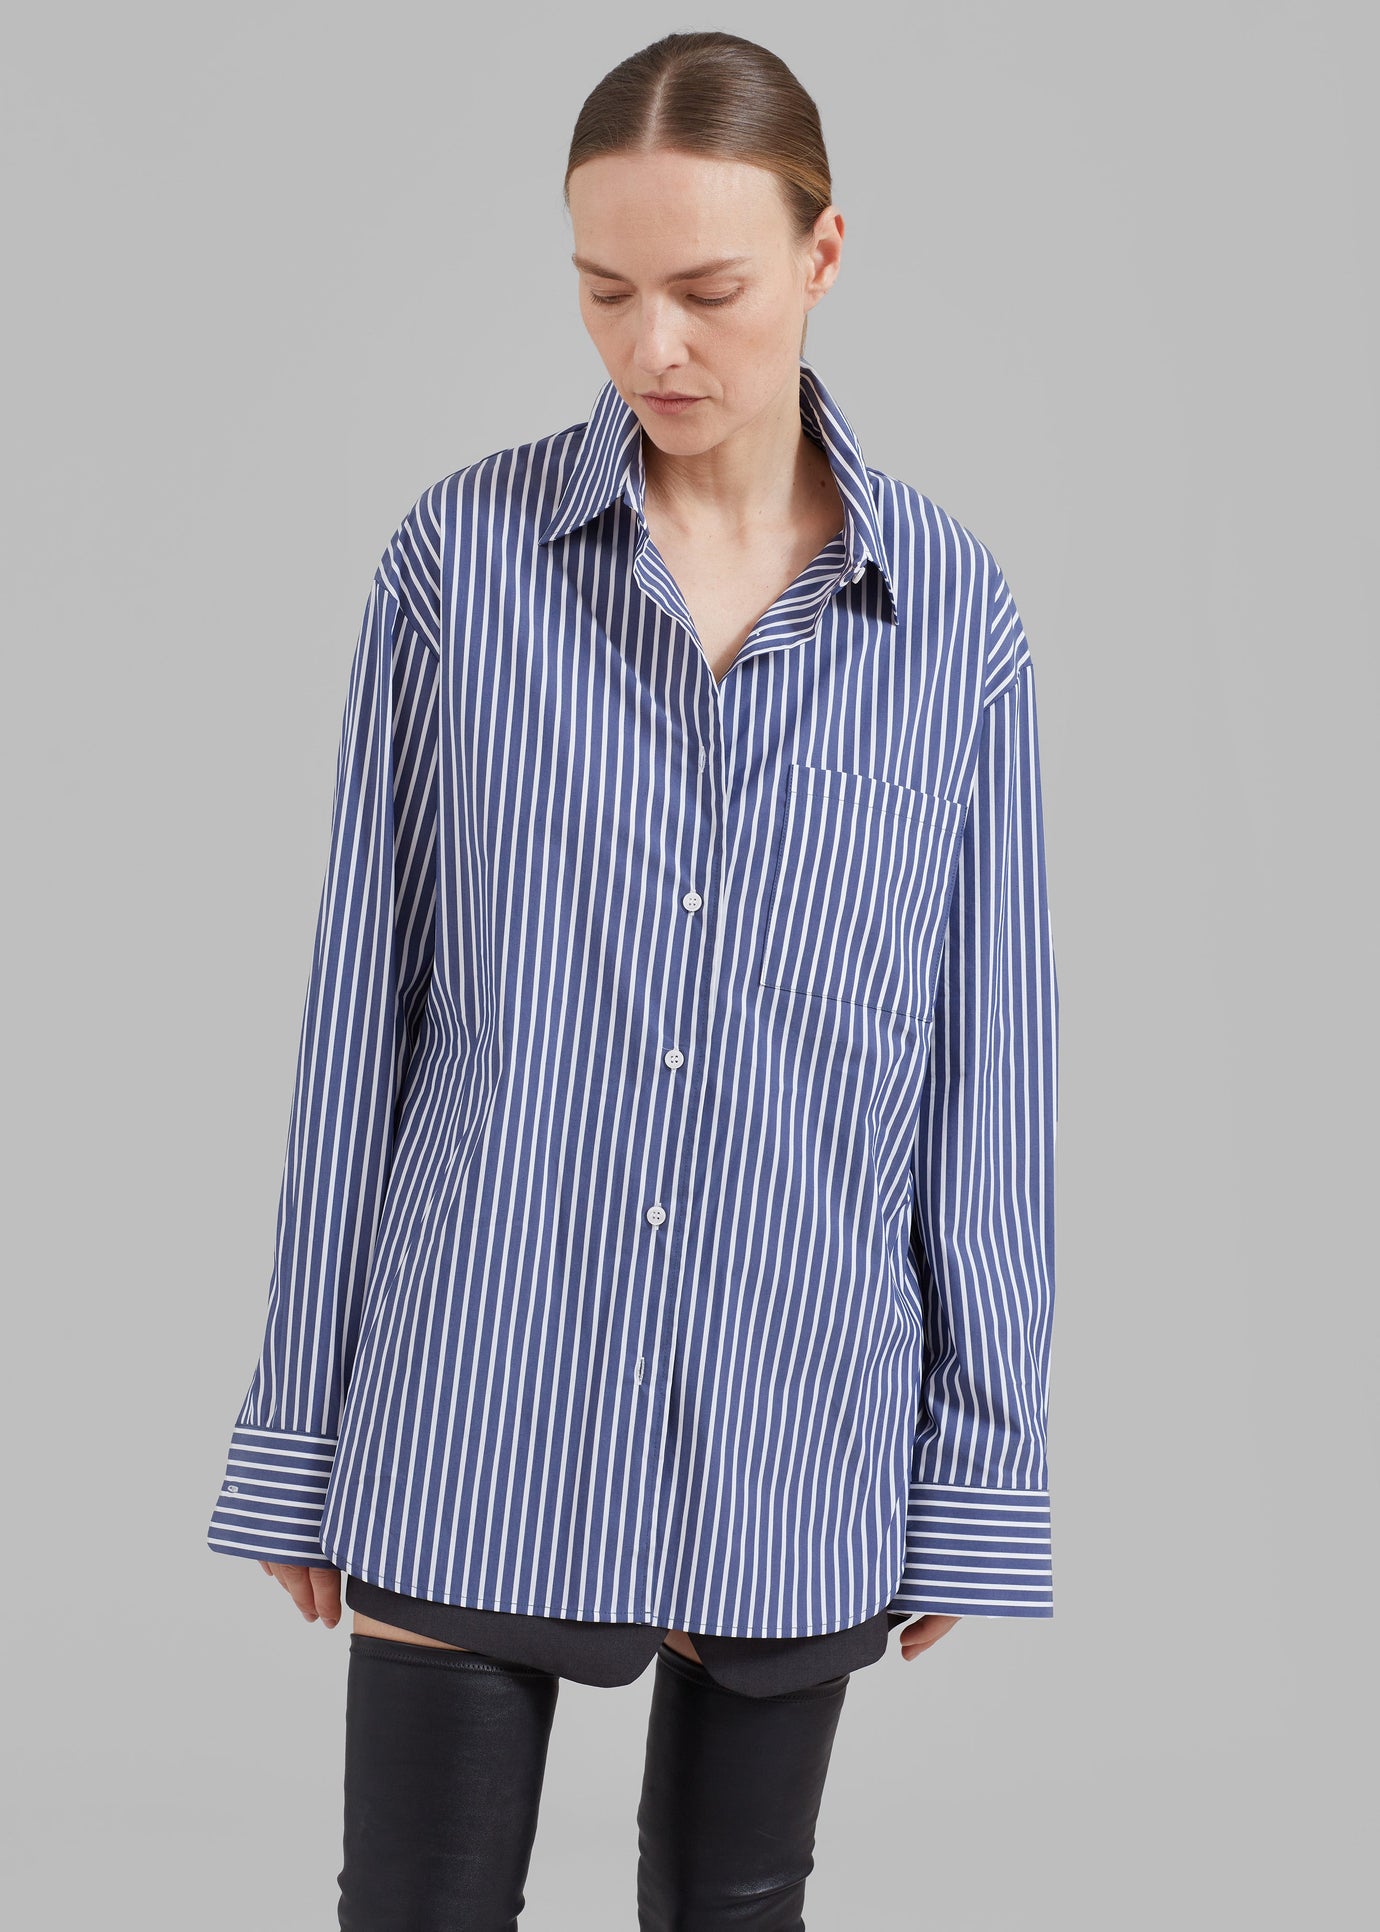 Lui Thin Stripe Shirt - Navy Stripe - 1